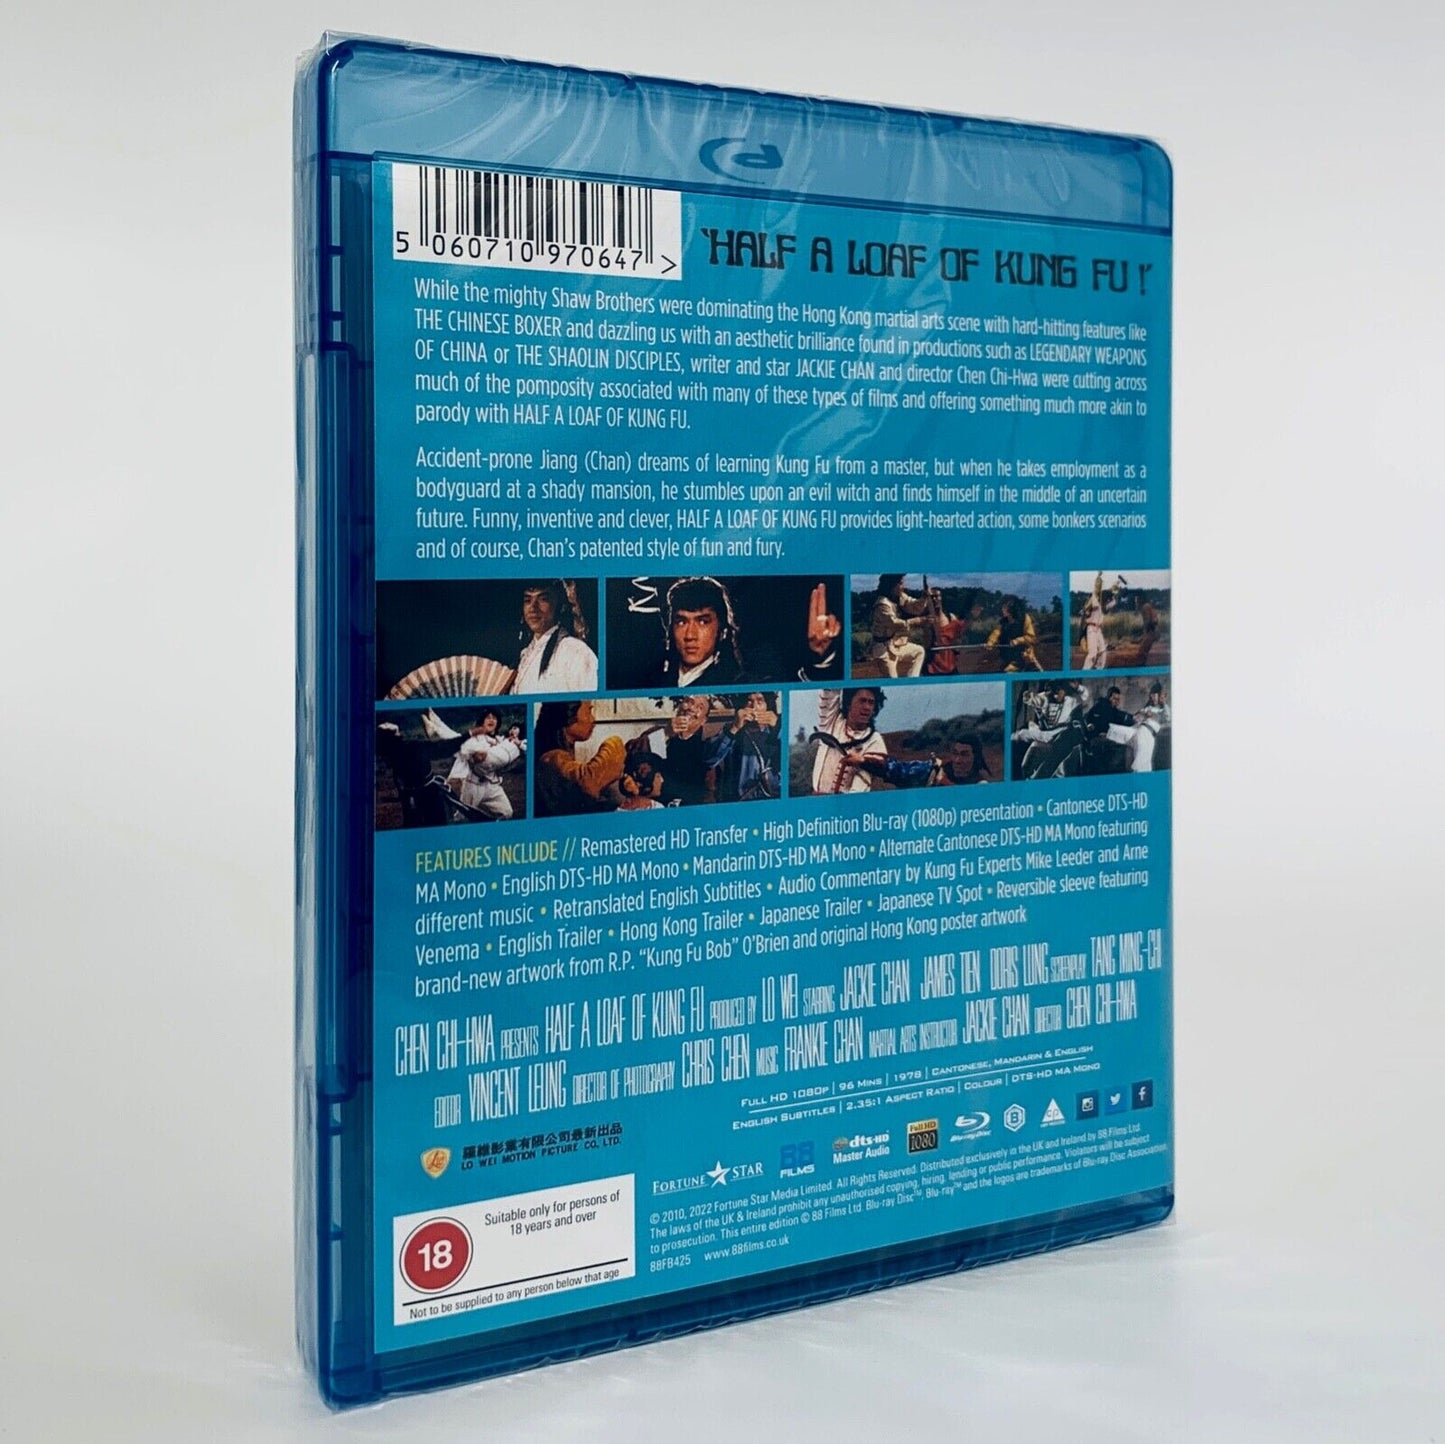 Half a Loaf of Kung Fu Jackie Chan Standard Region B Blu-ray 88 Films UK